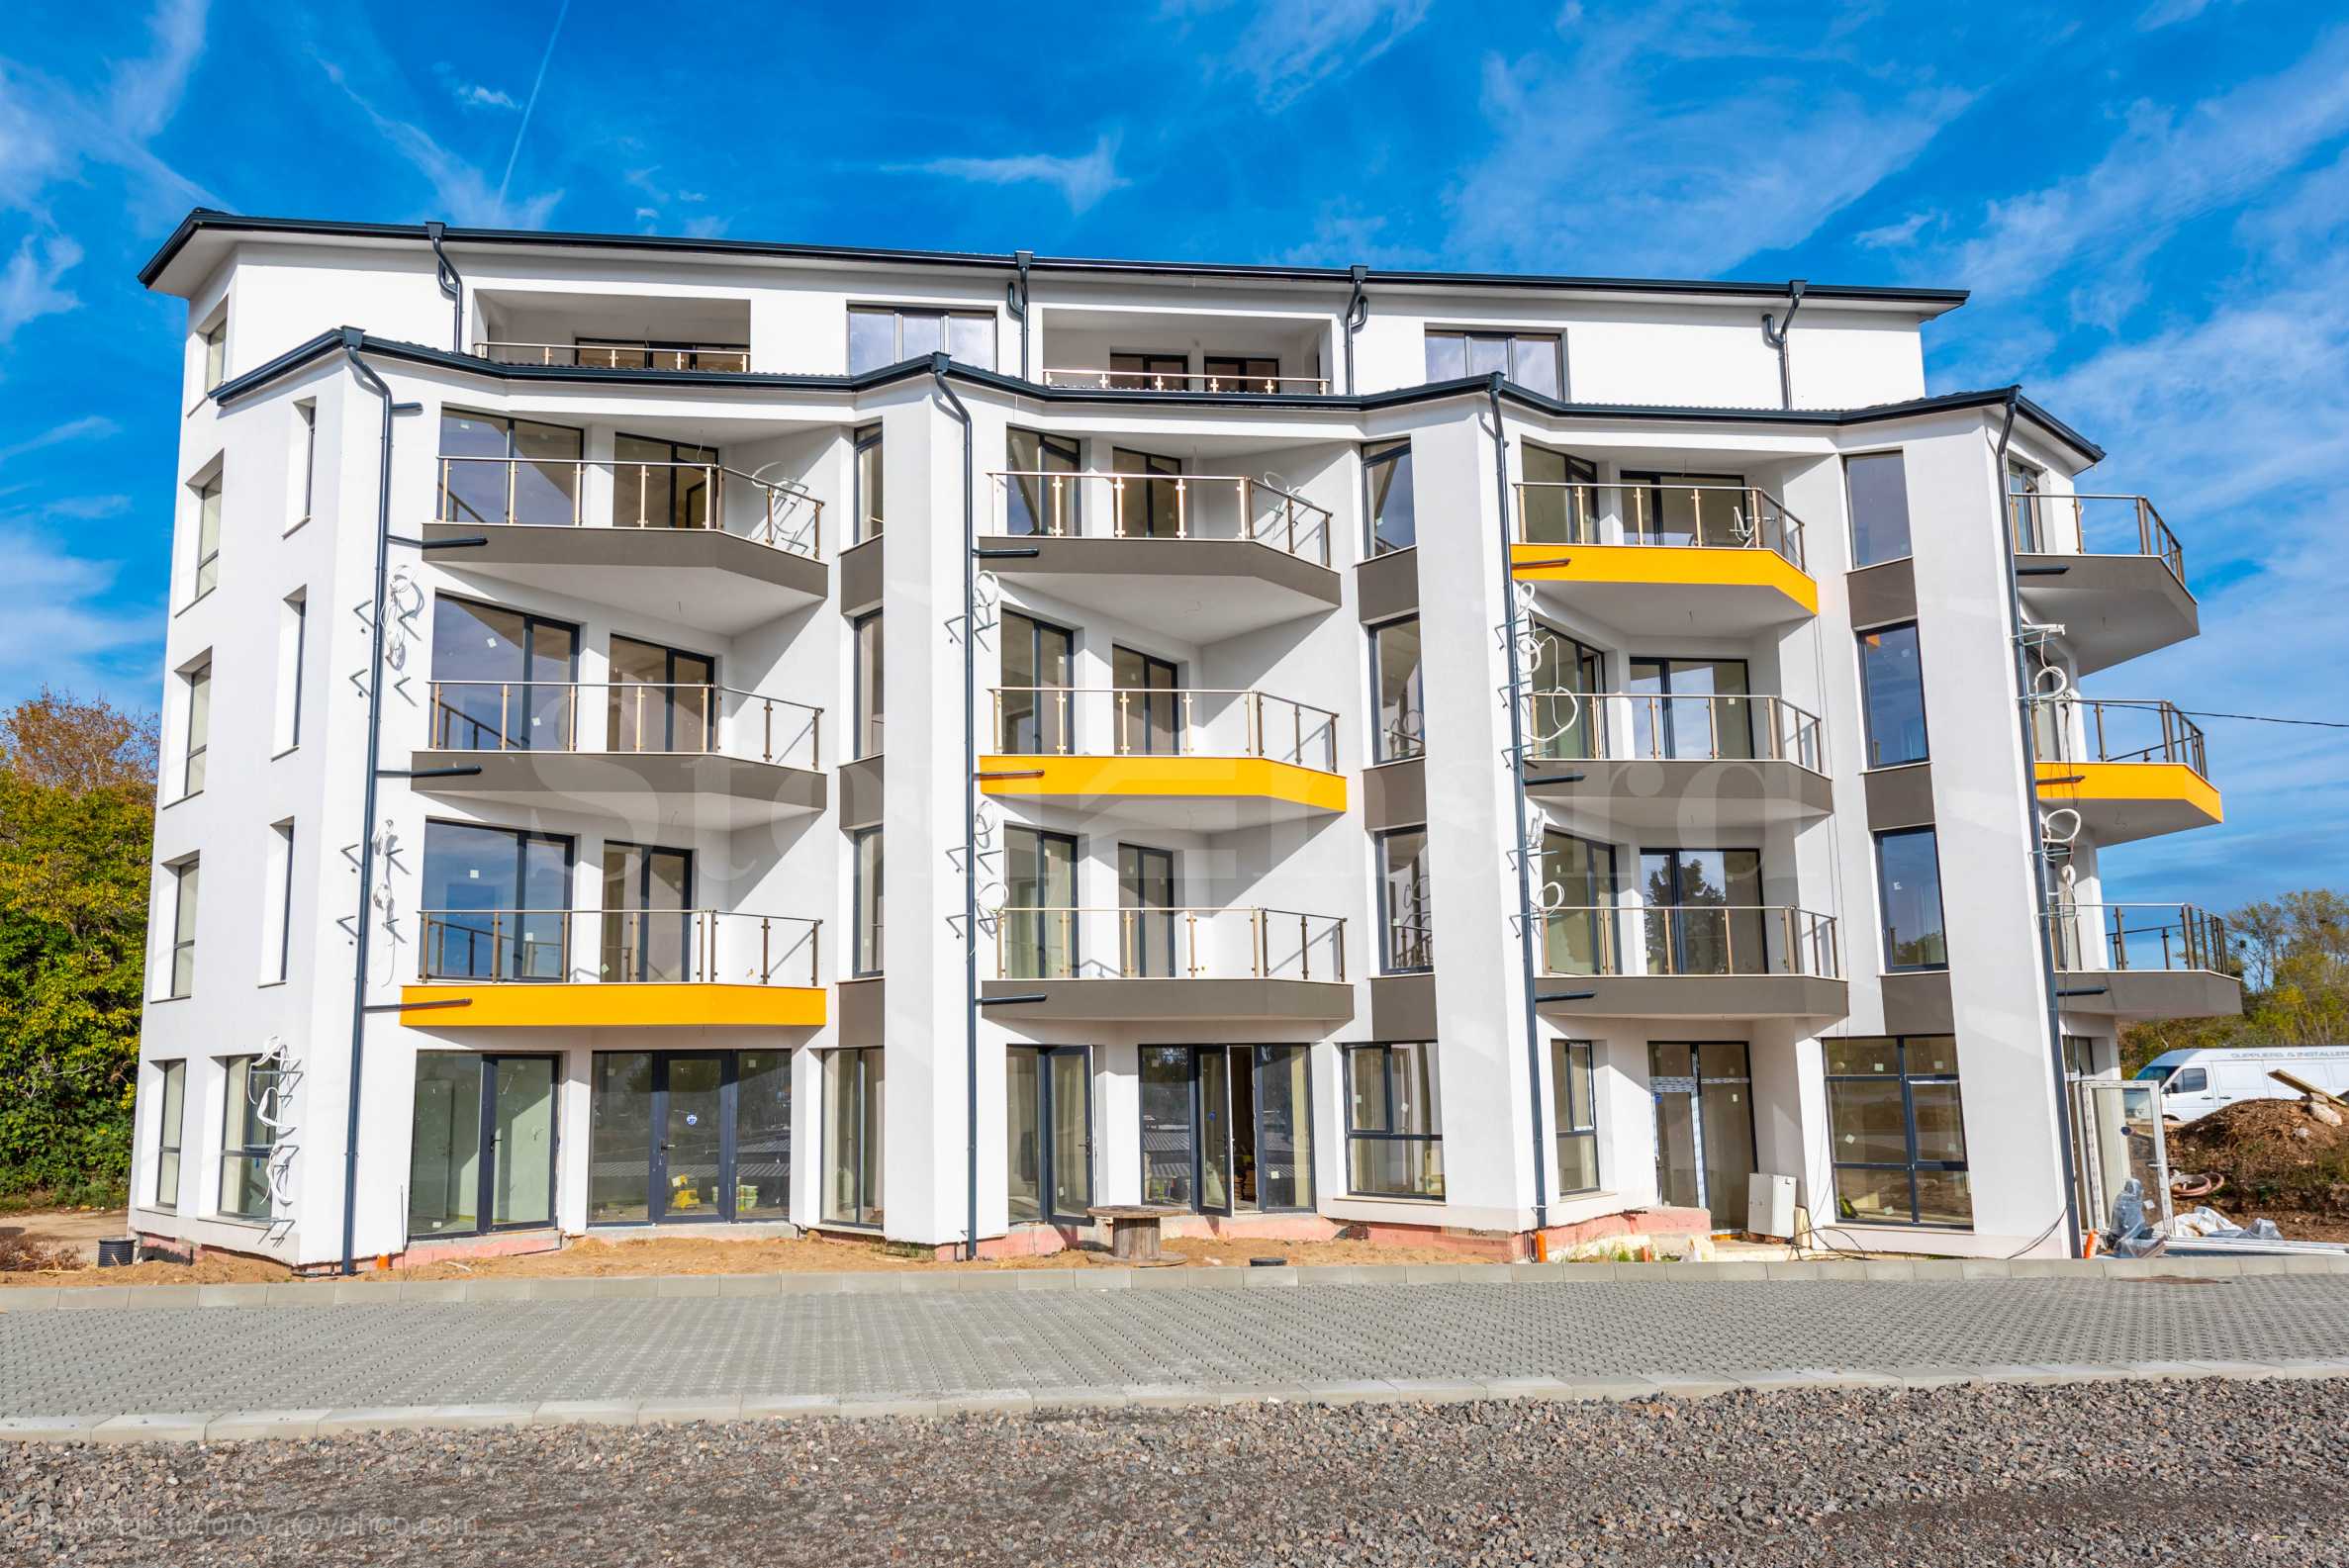 Comfortable apartments 200 meters from Kavatsi beach2 - Stonehard